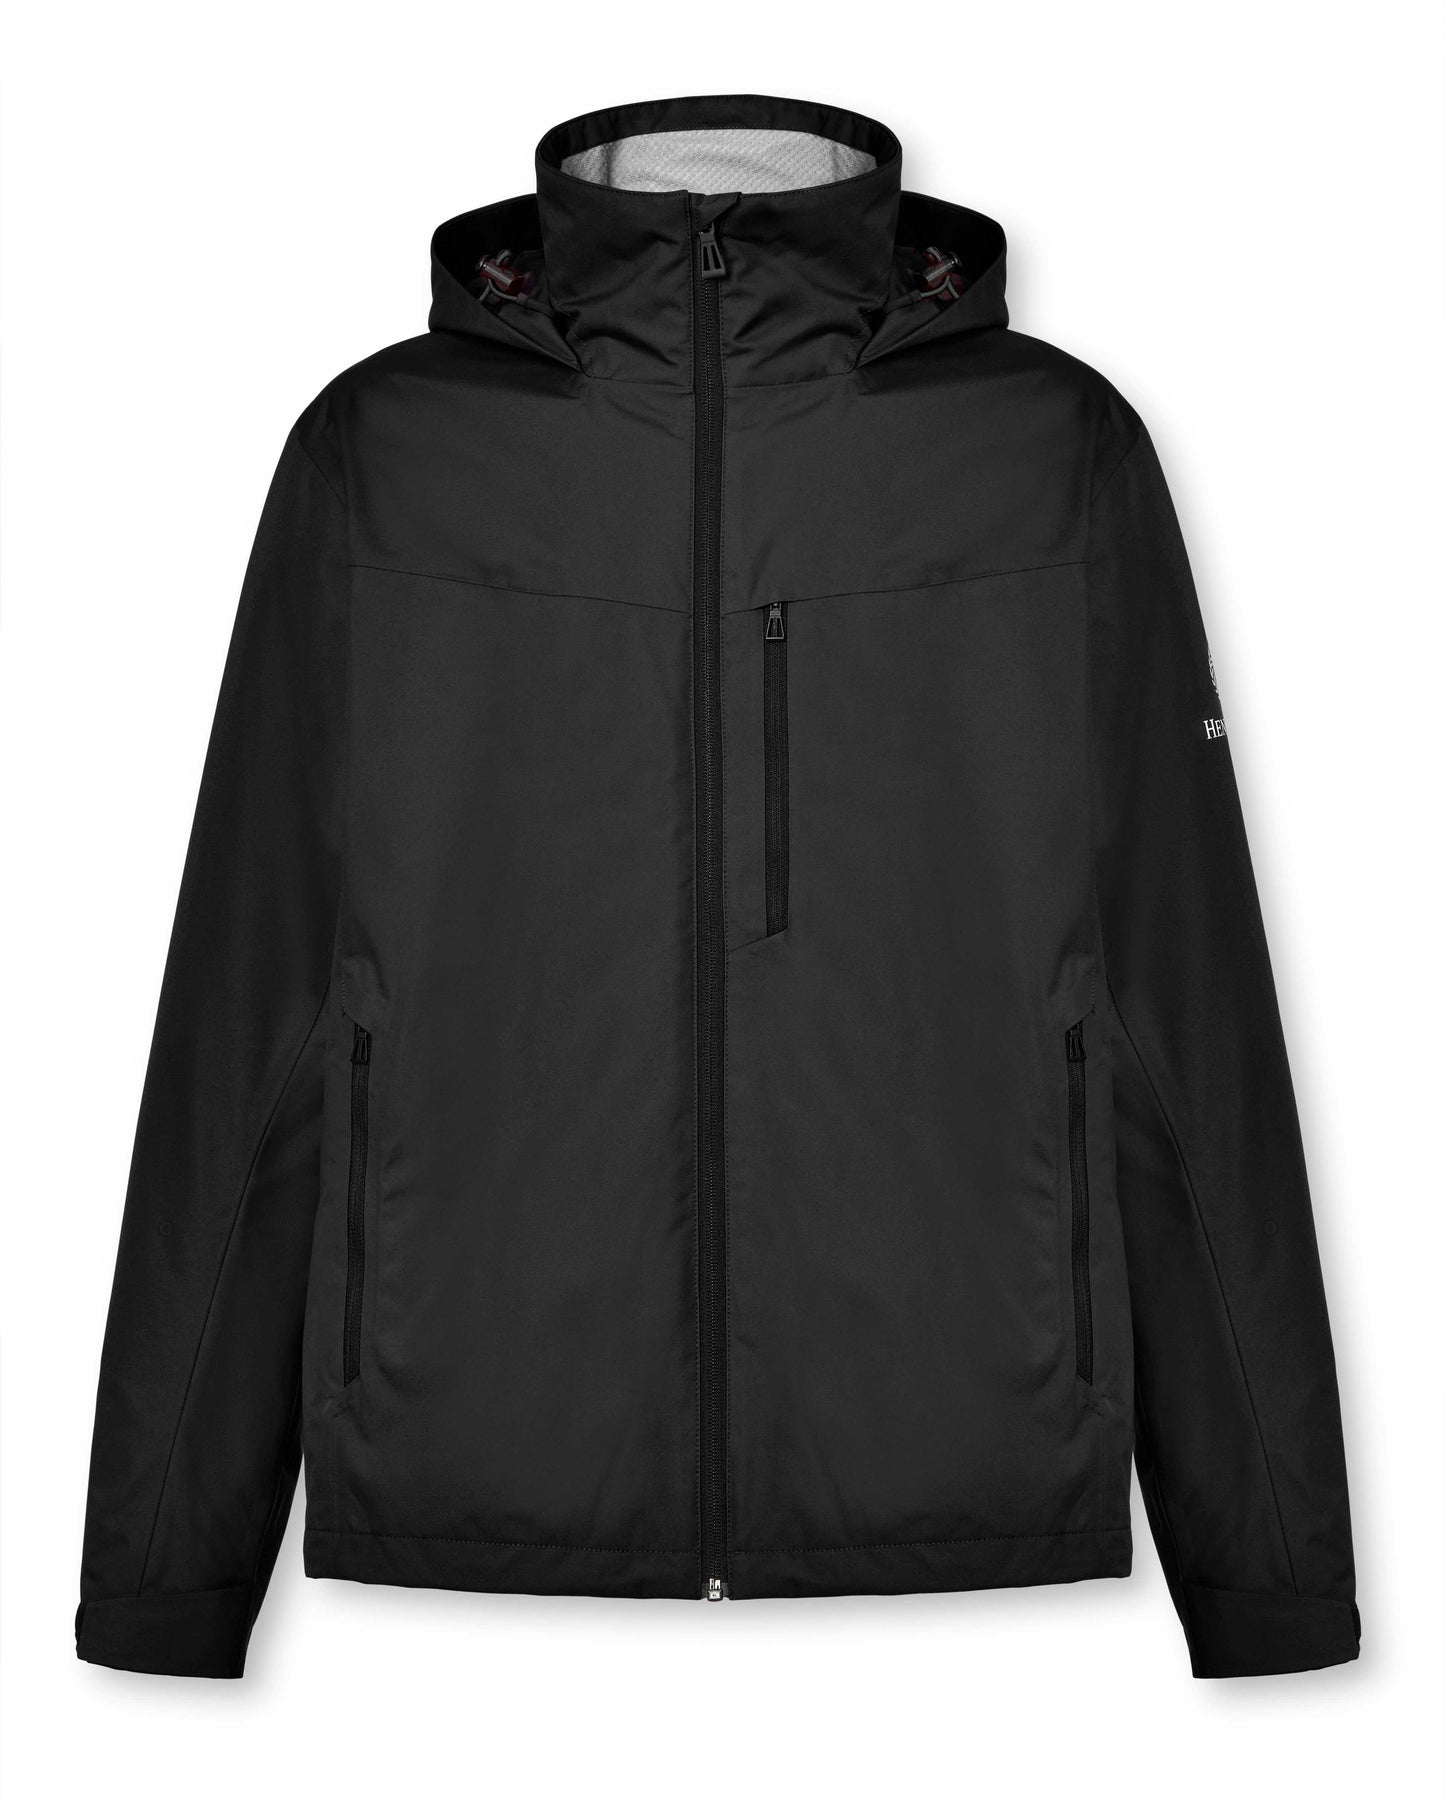 Men's Cool Breeze Jacket - Black